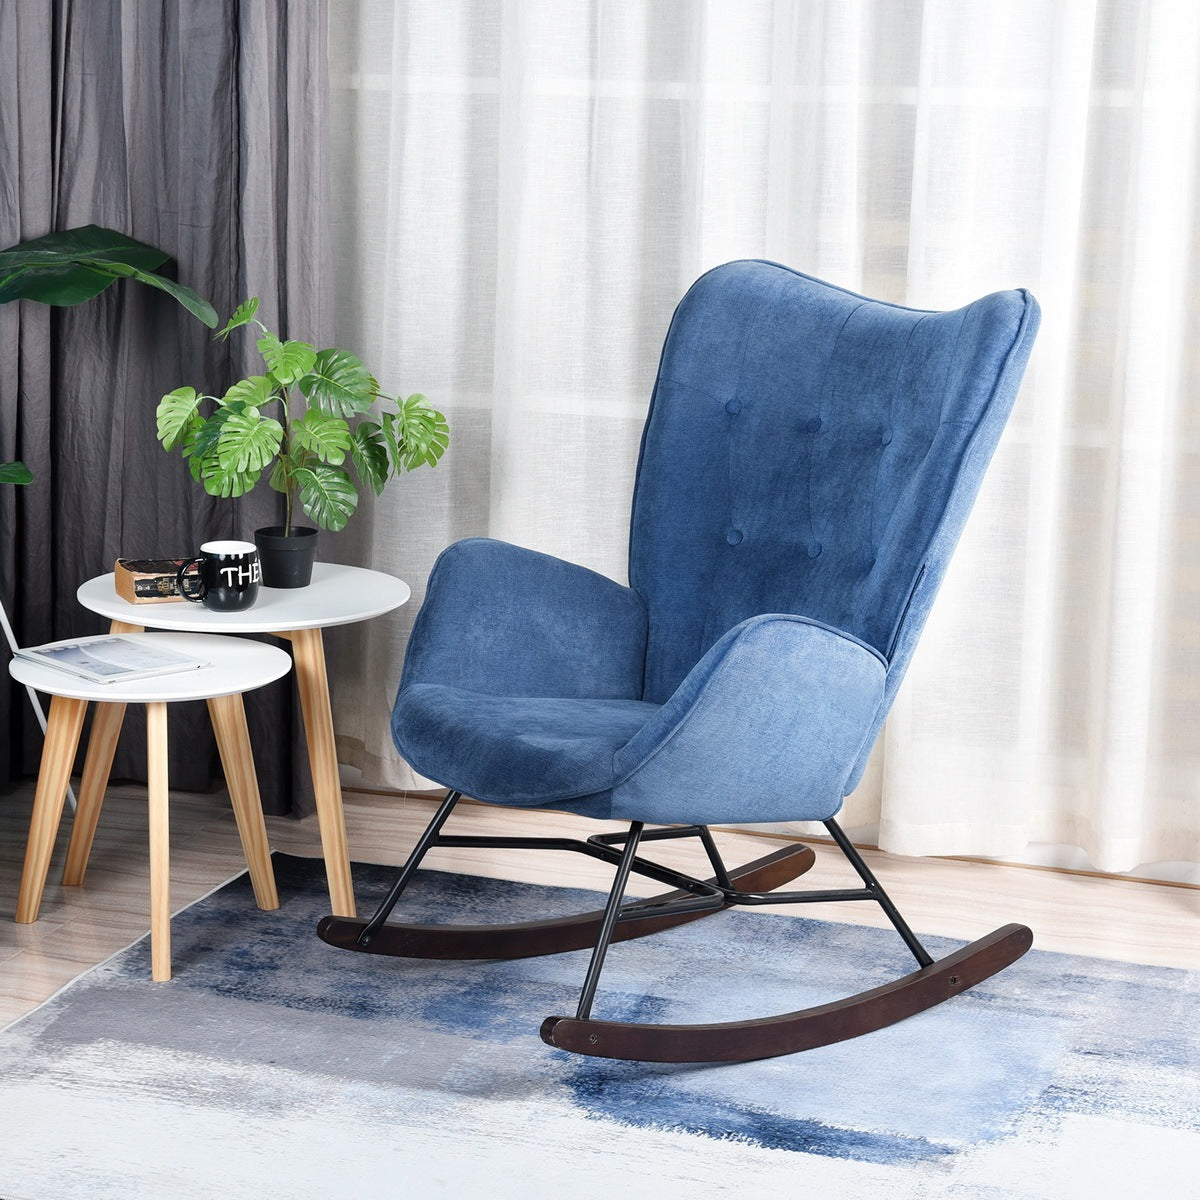 Upholstered Rocking Chair Rocker for Living Room blue-fabric-upholstered